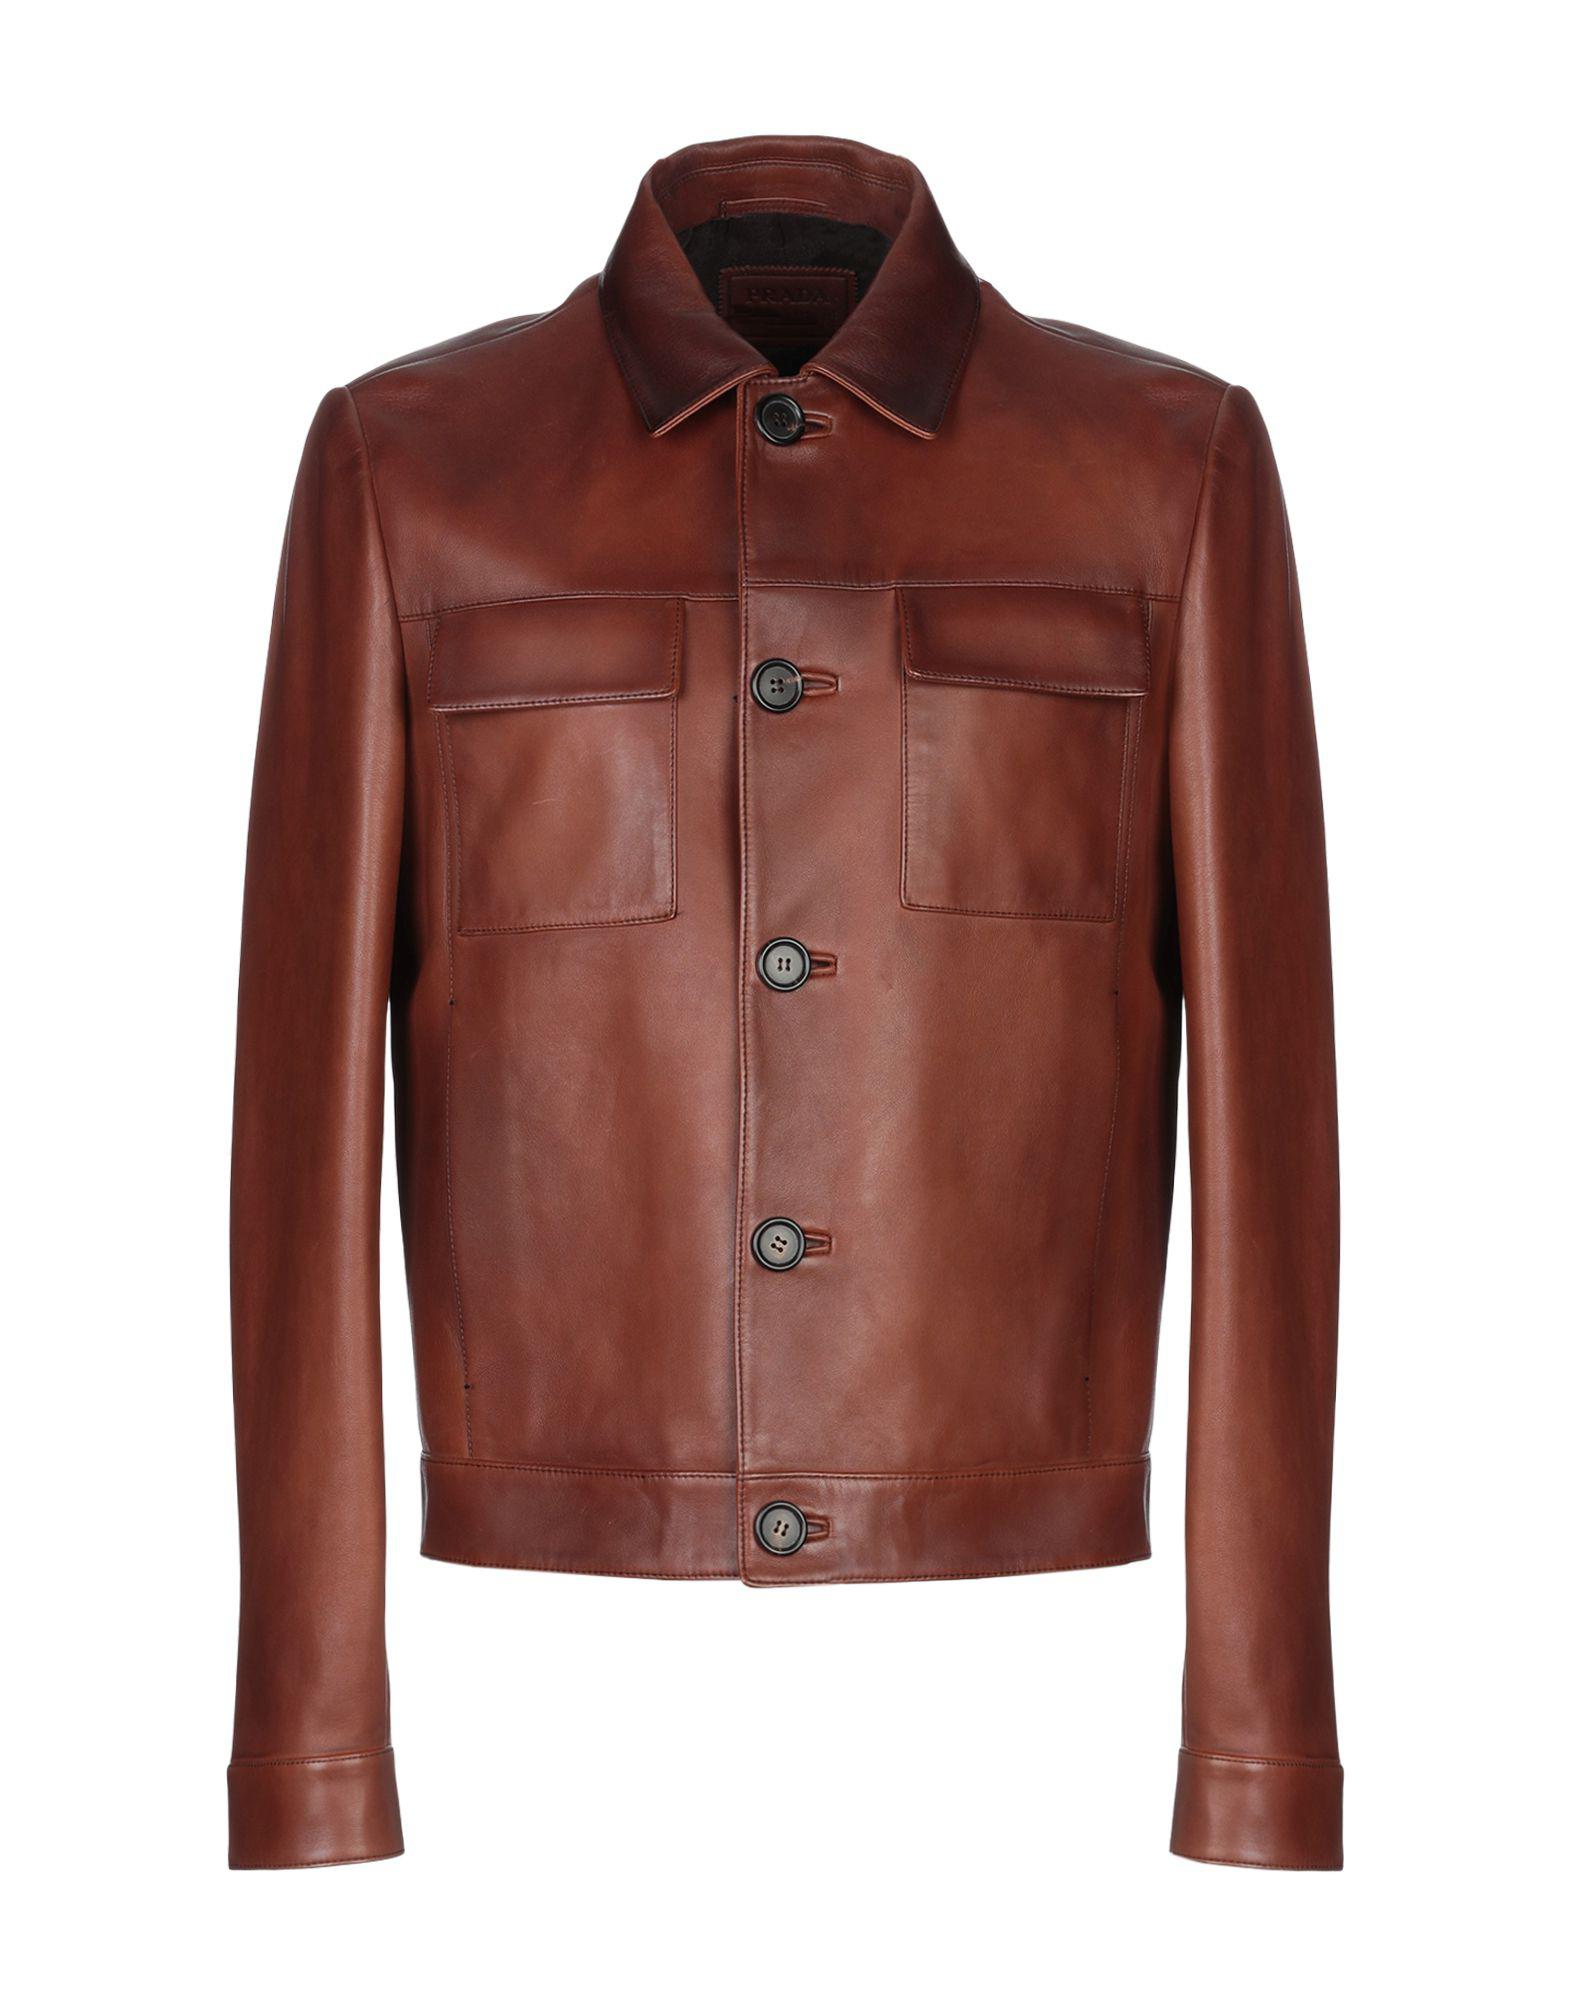 Prada Leather Jacket in Brown for Men - Lyst